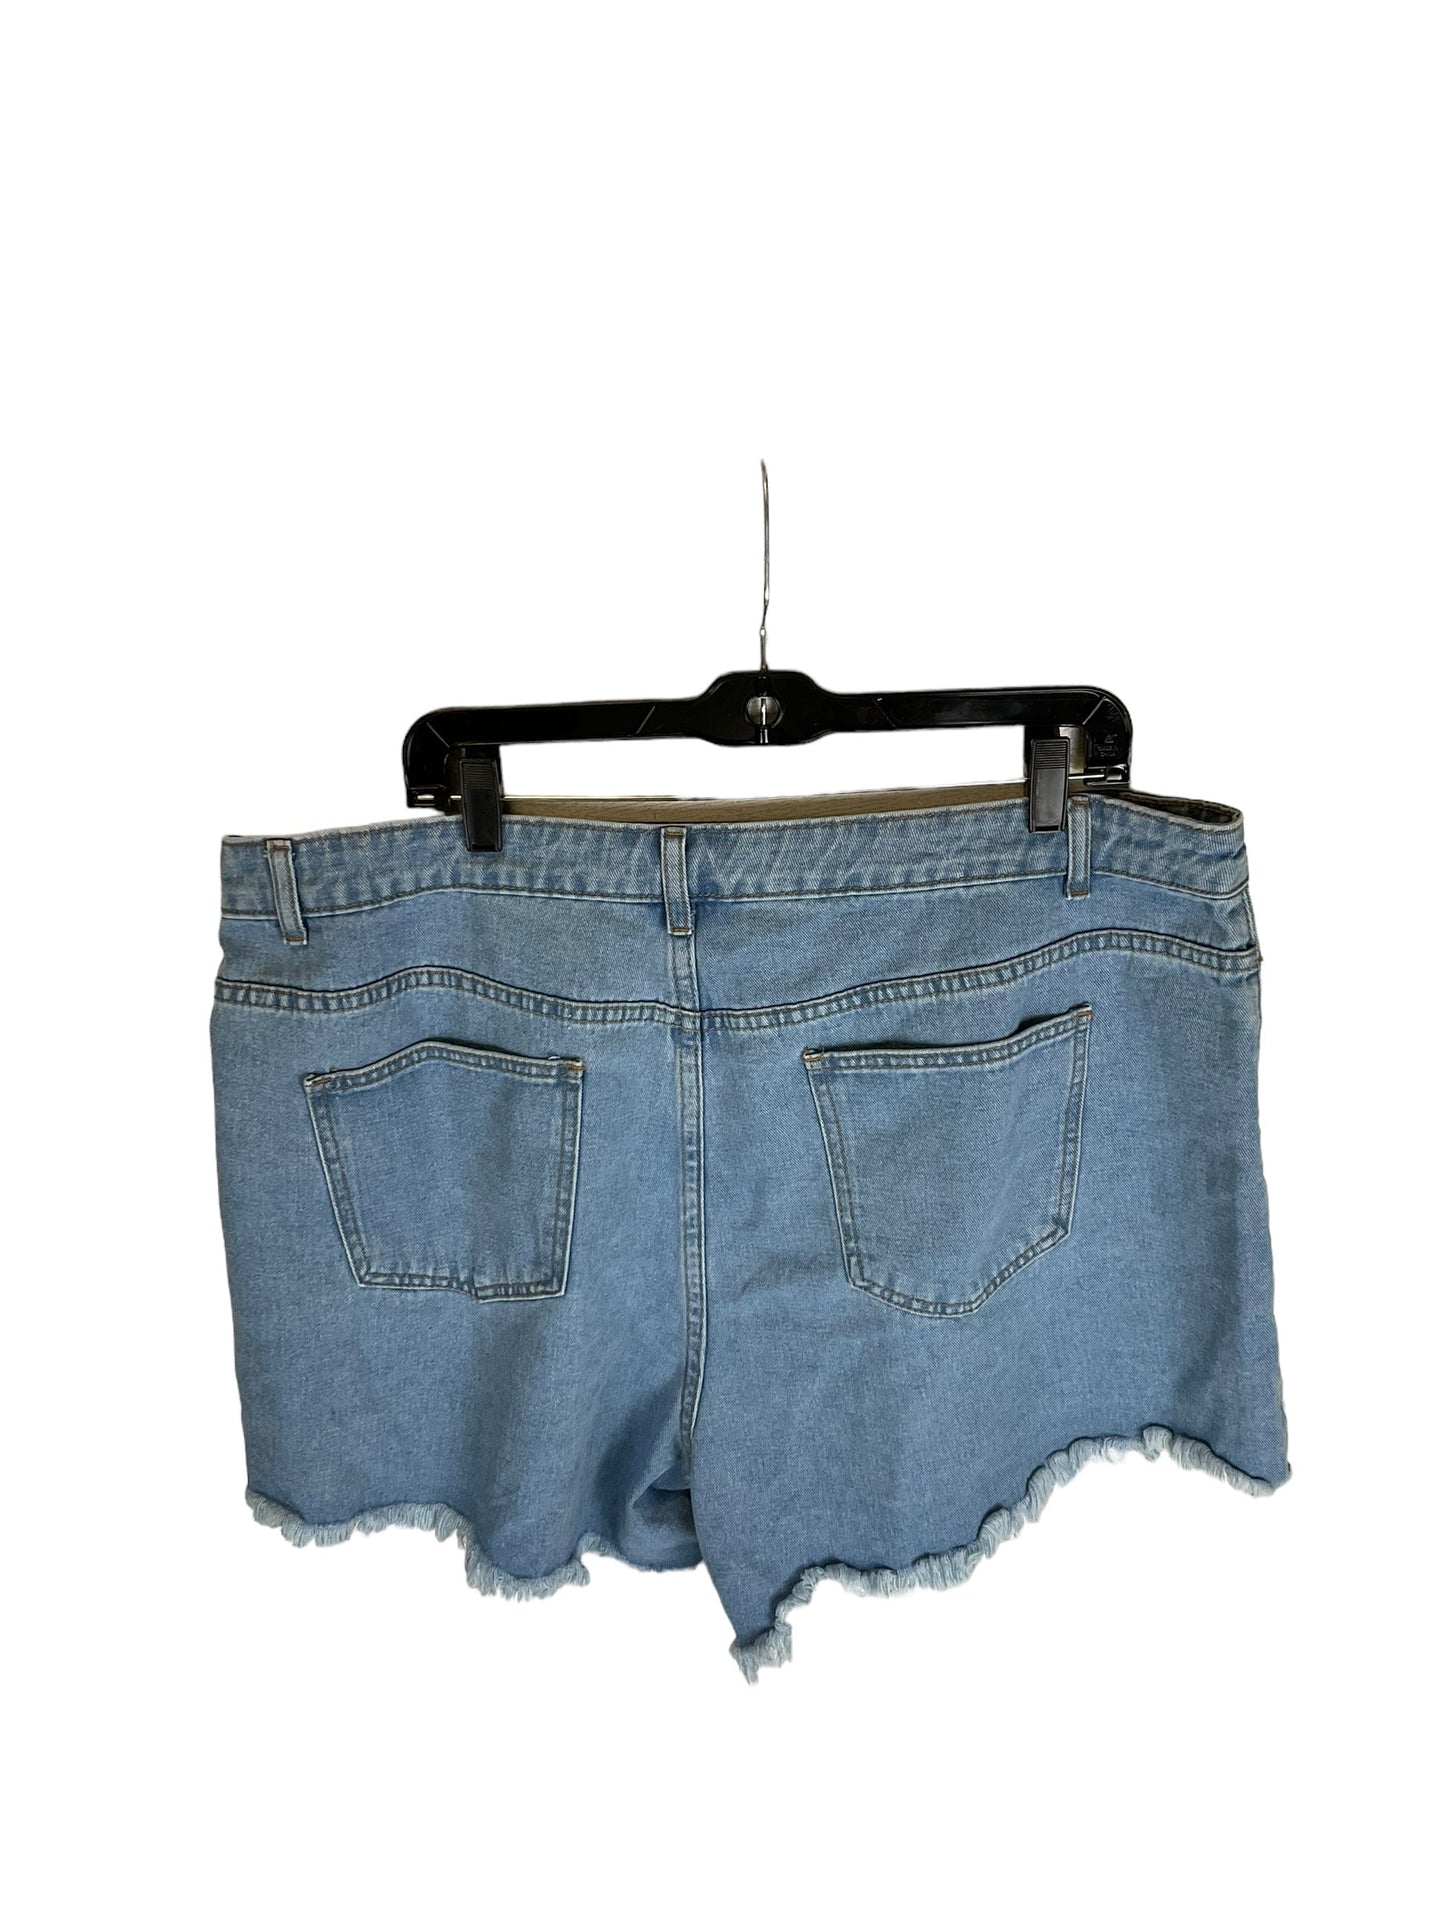 Shorts By Shein  Size: 3x